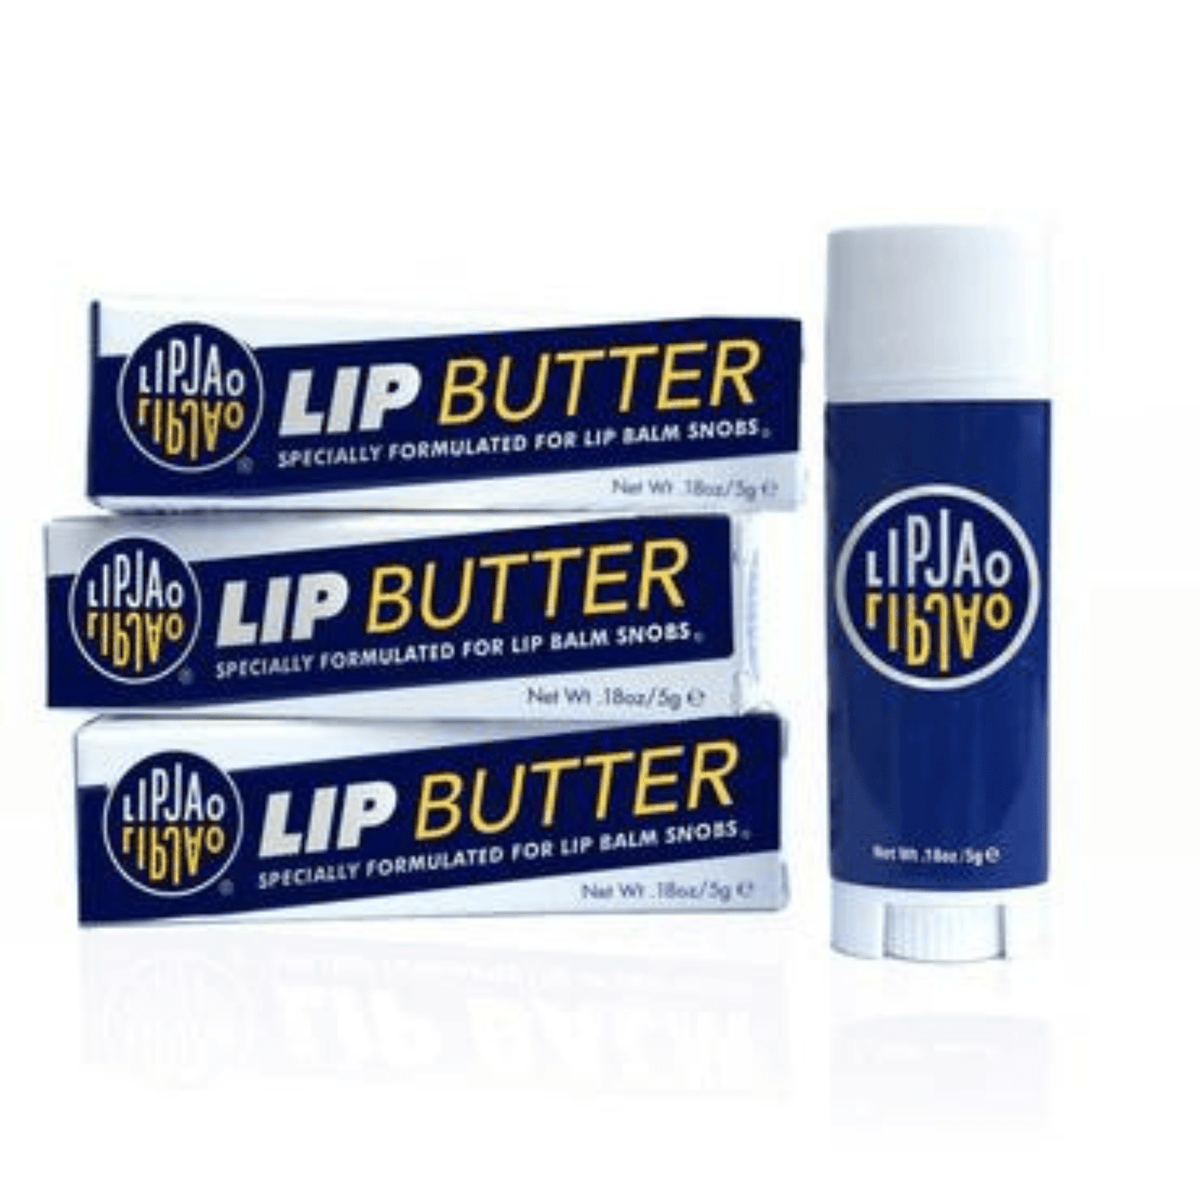 Alternate Image of Lipjao Lip Butter